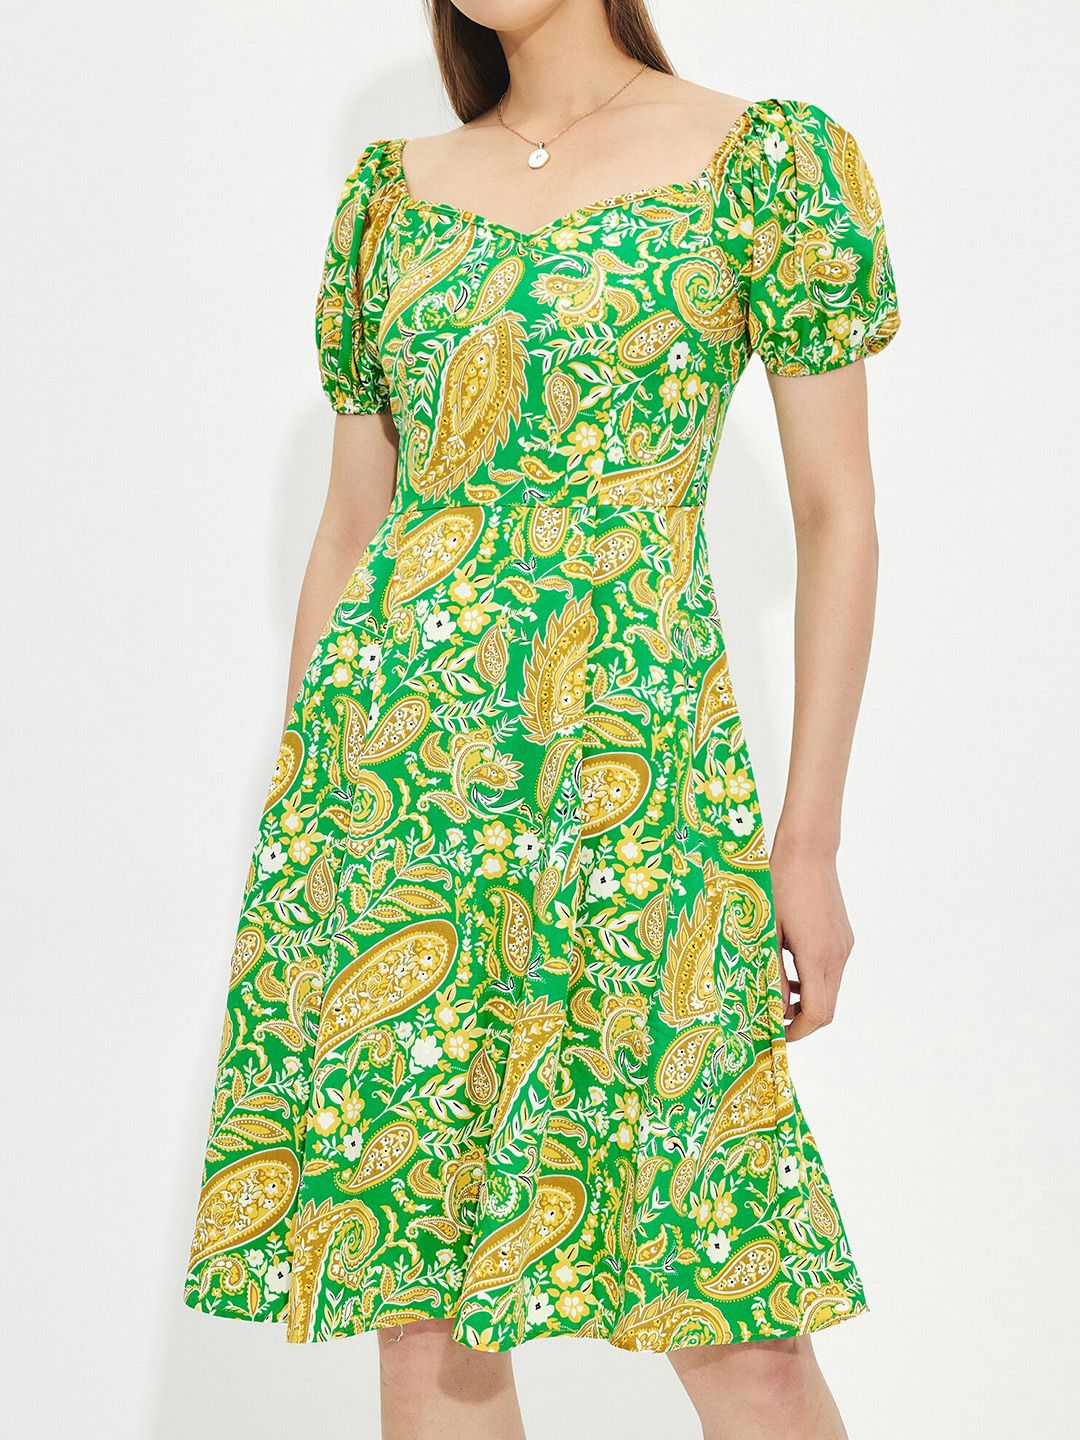 URBANIC Green Floral Dress Price in India